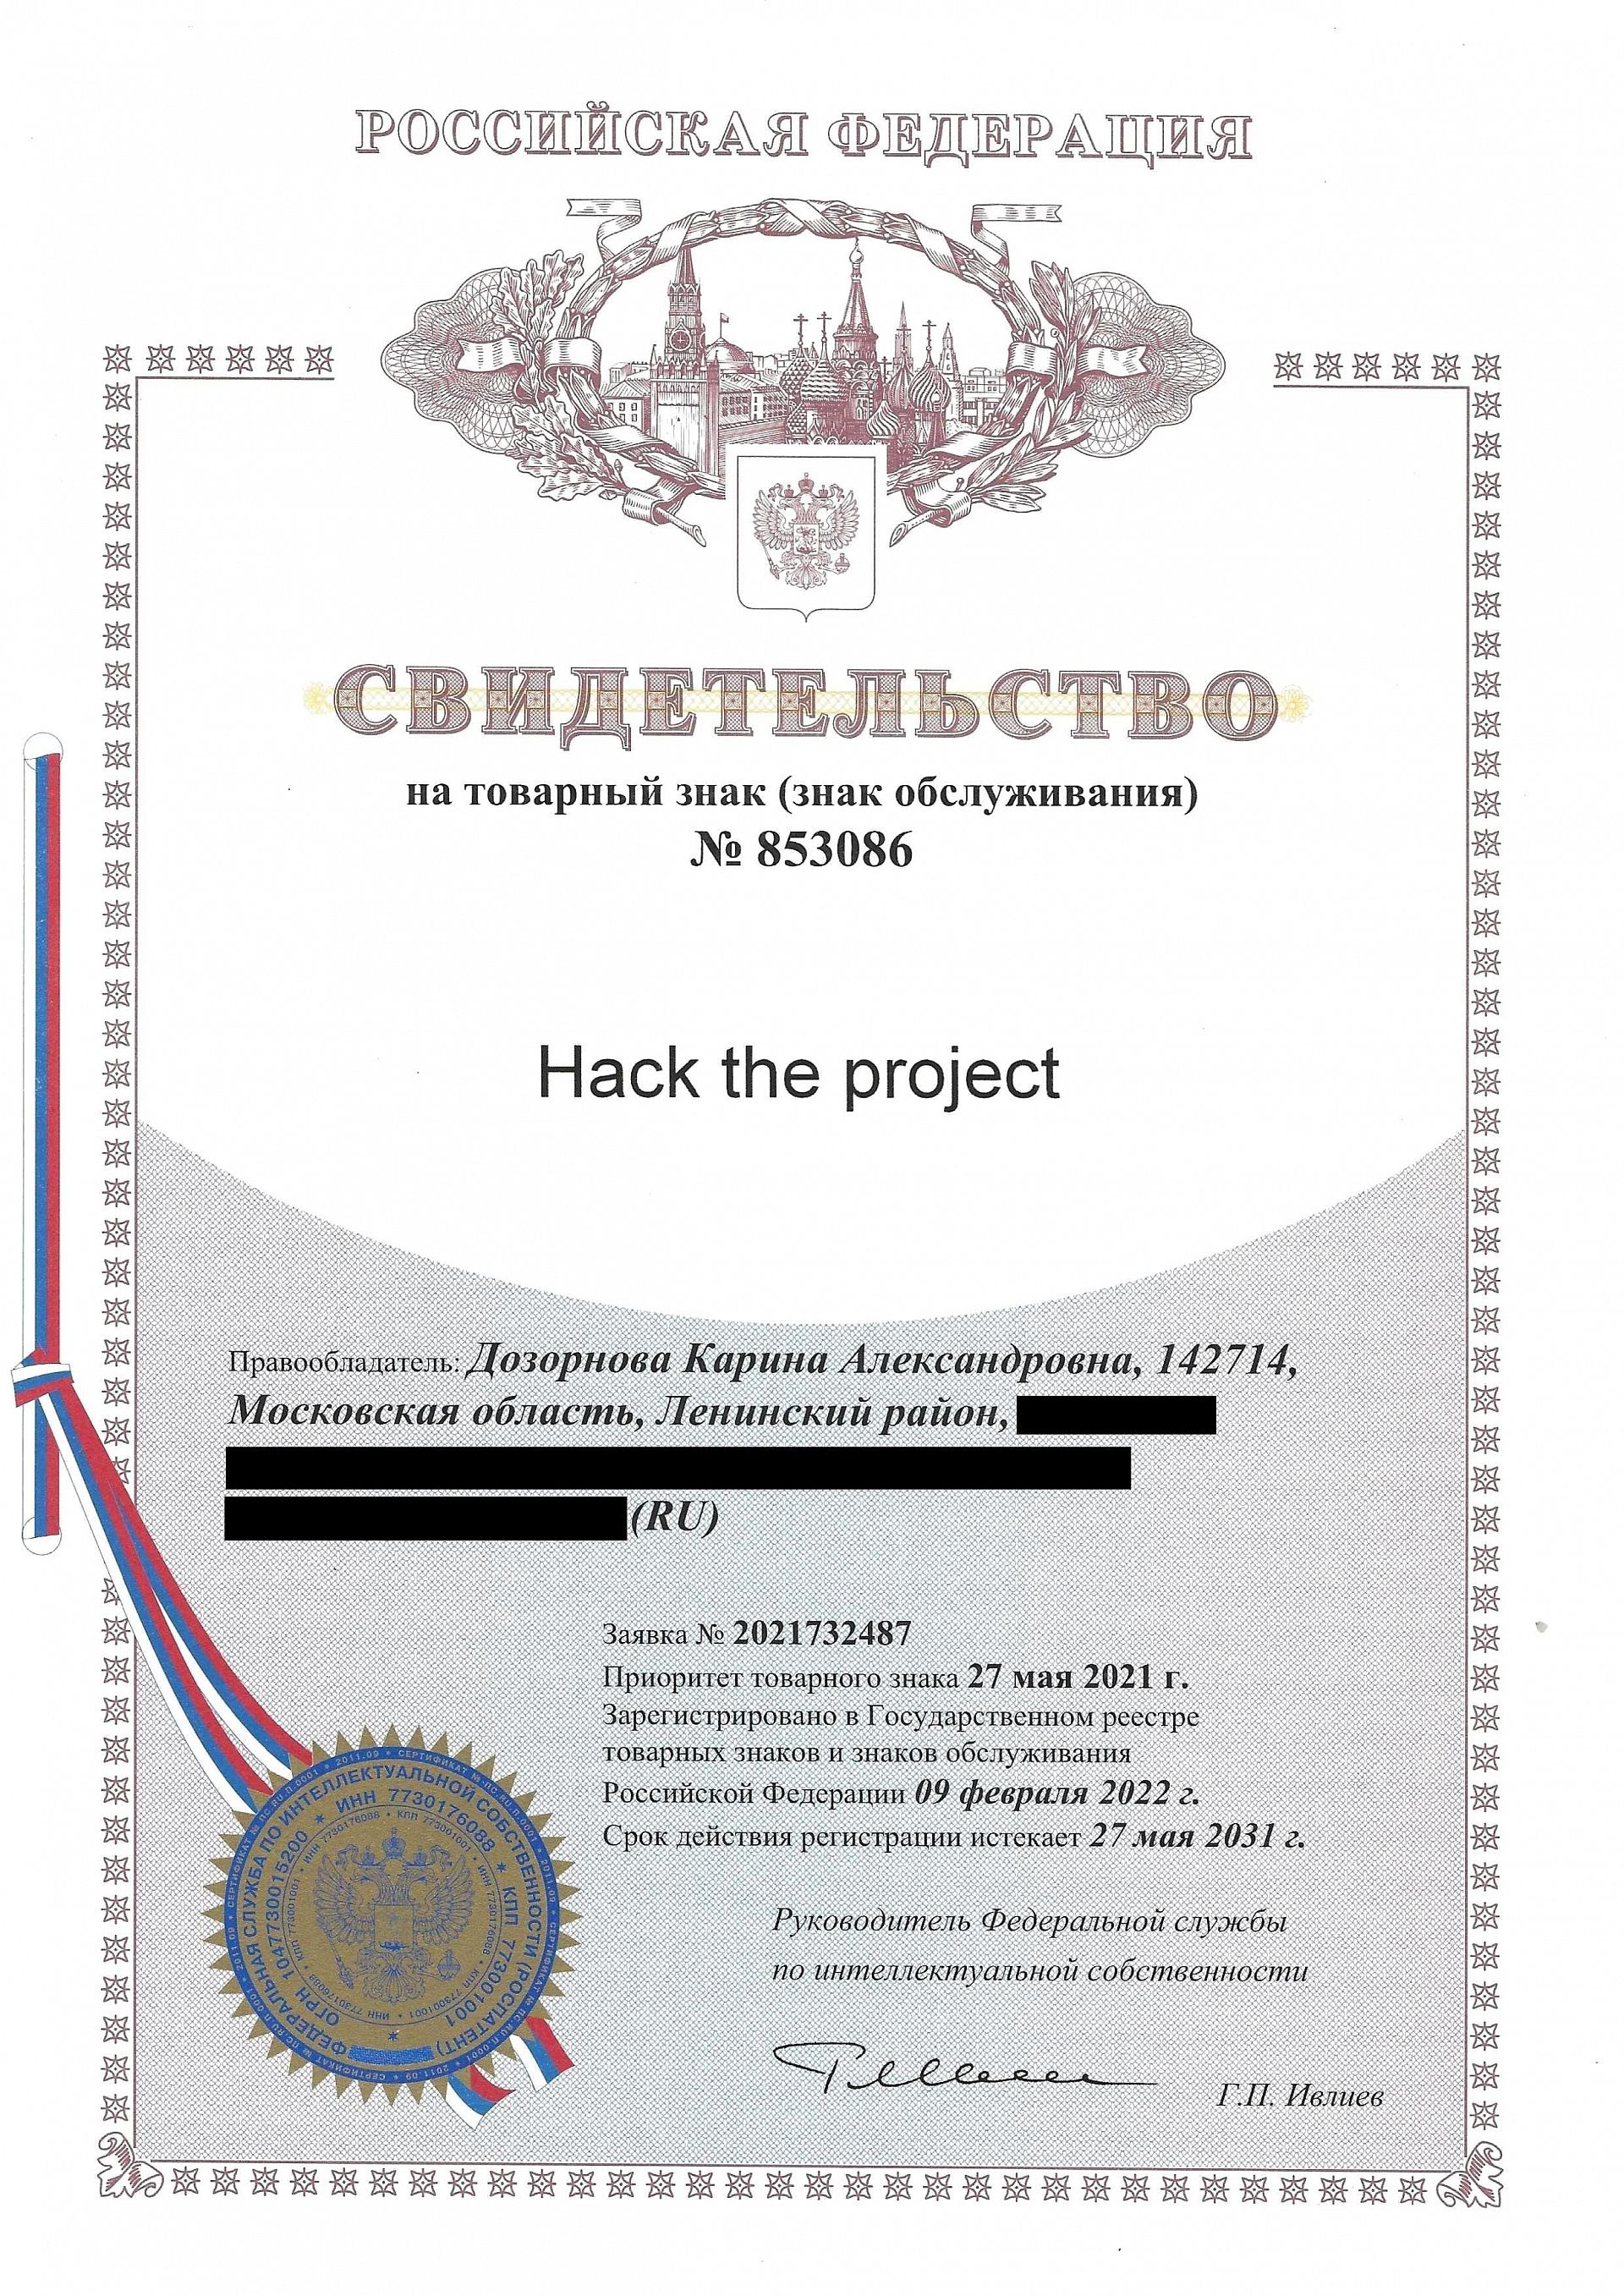 Товарный знак № 853086 – Hack the project